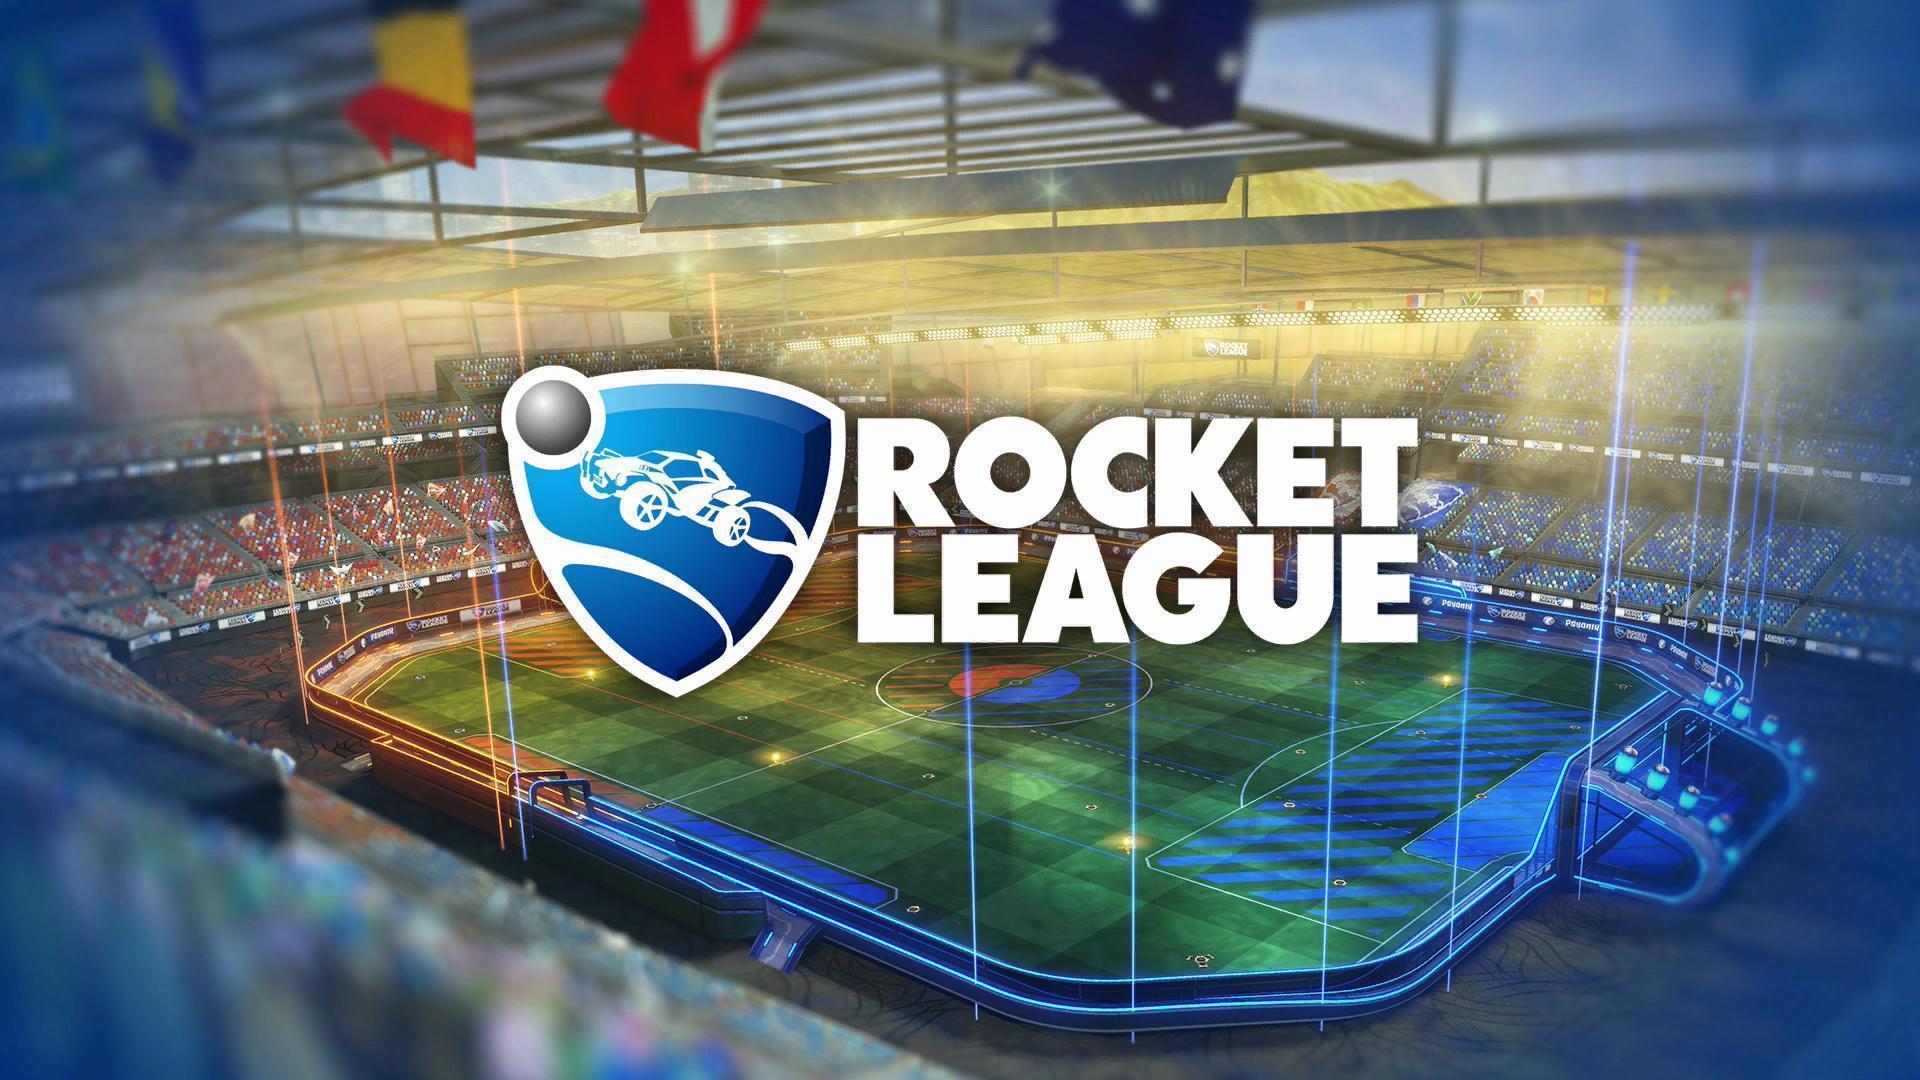 Rocket League Wallpaper free download